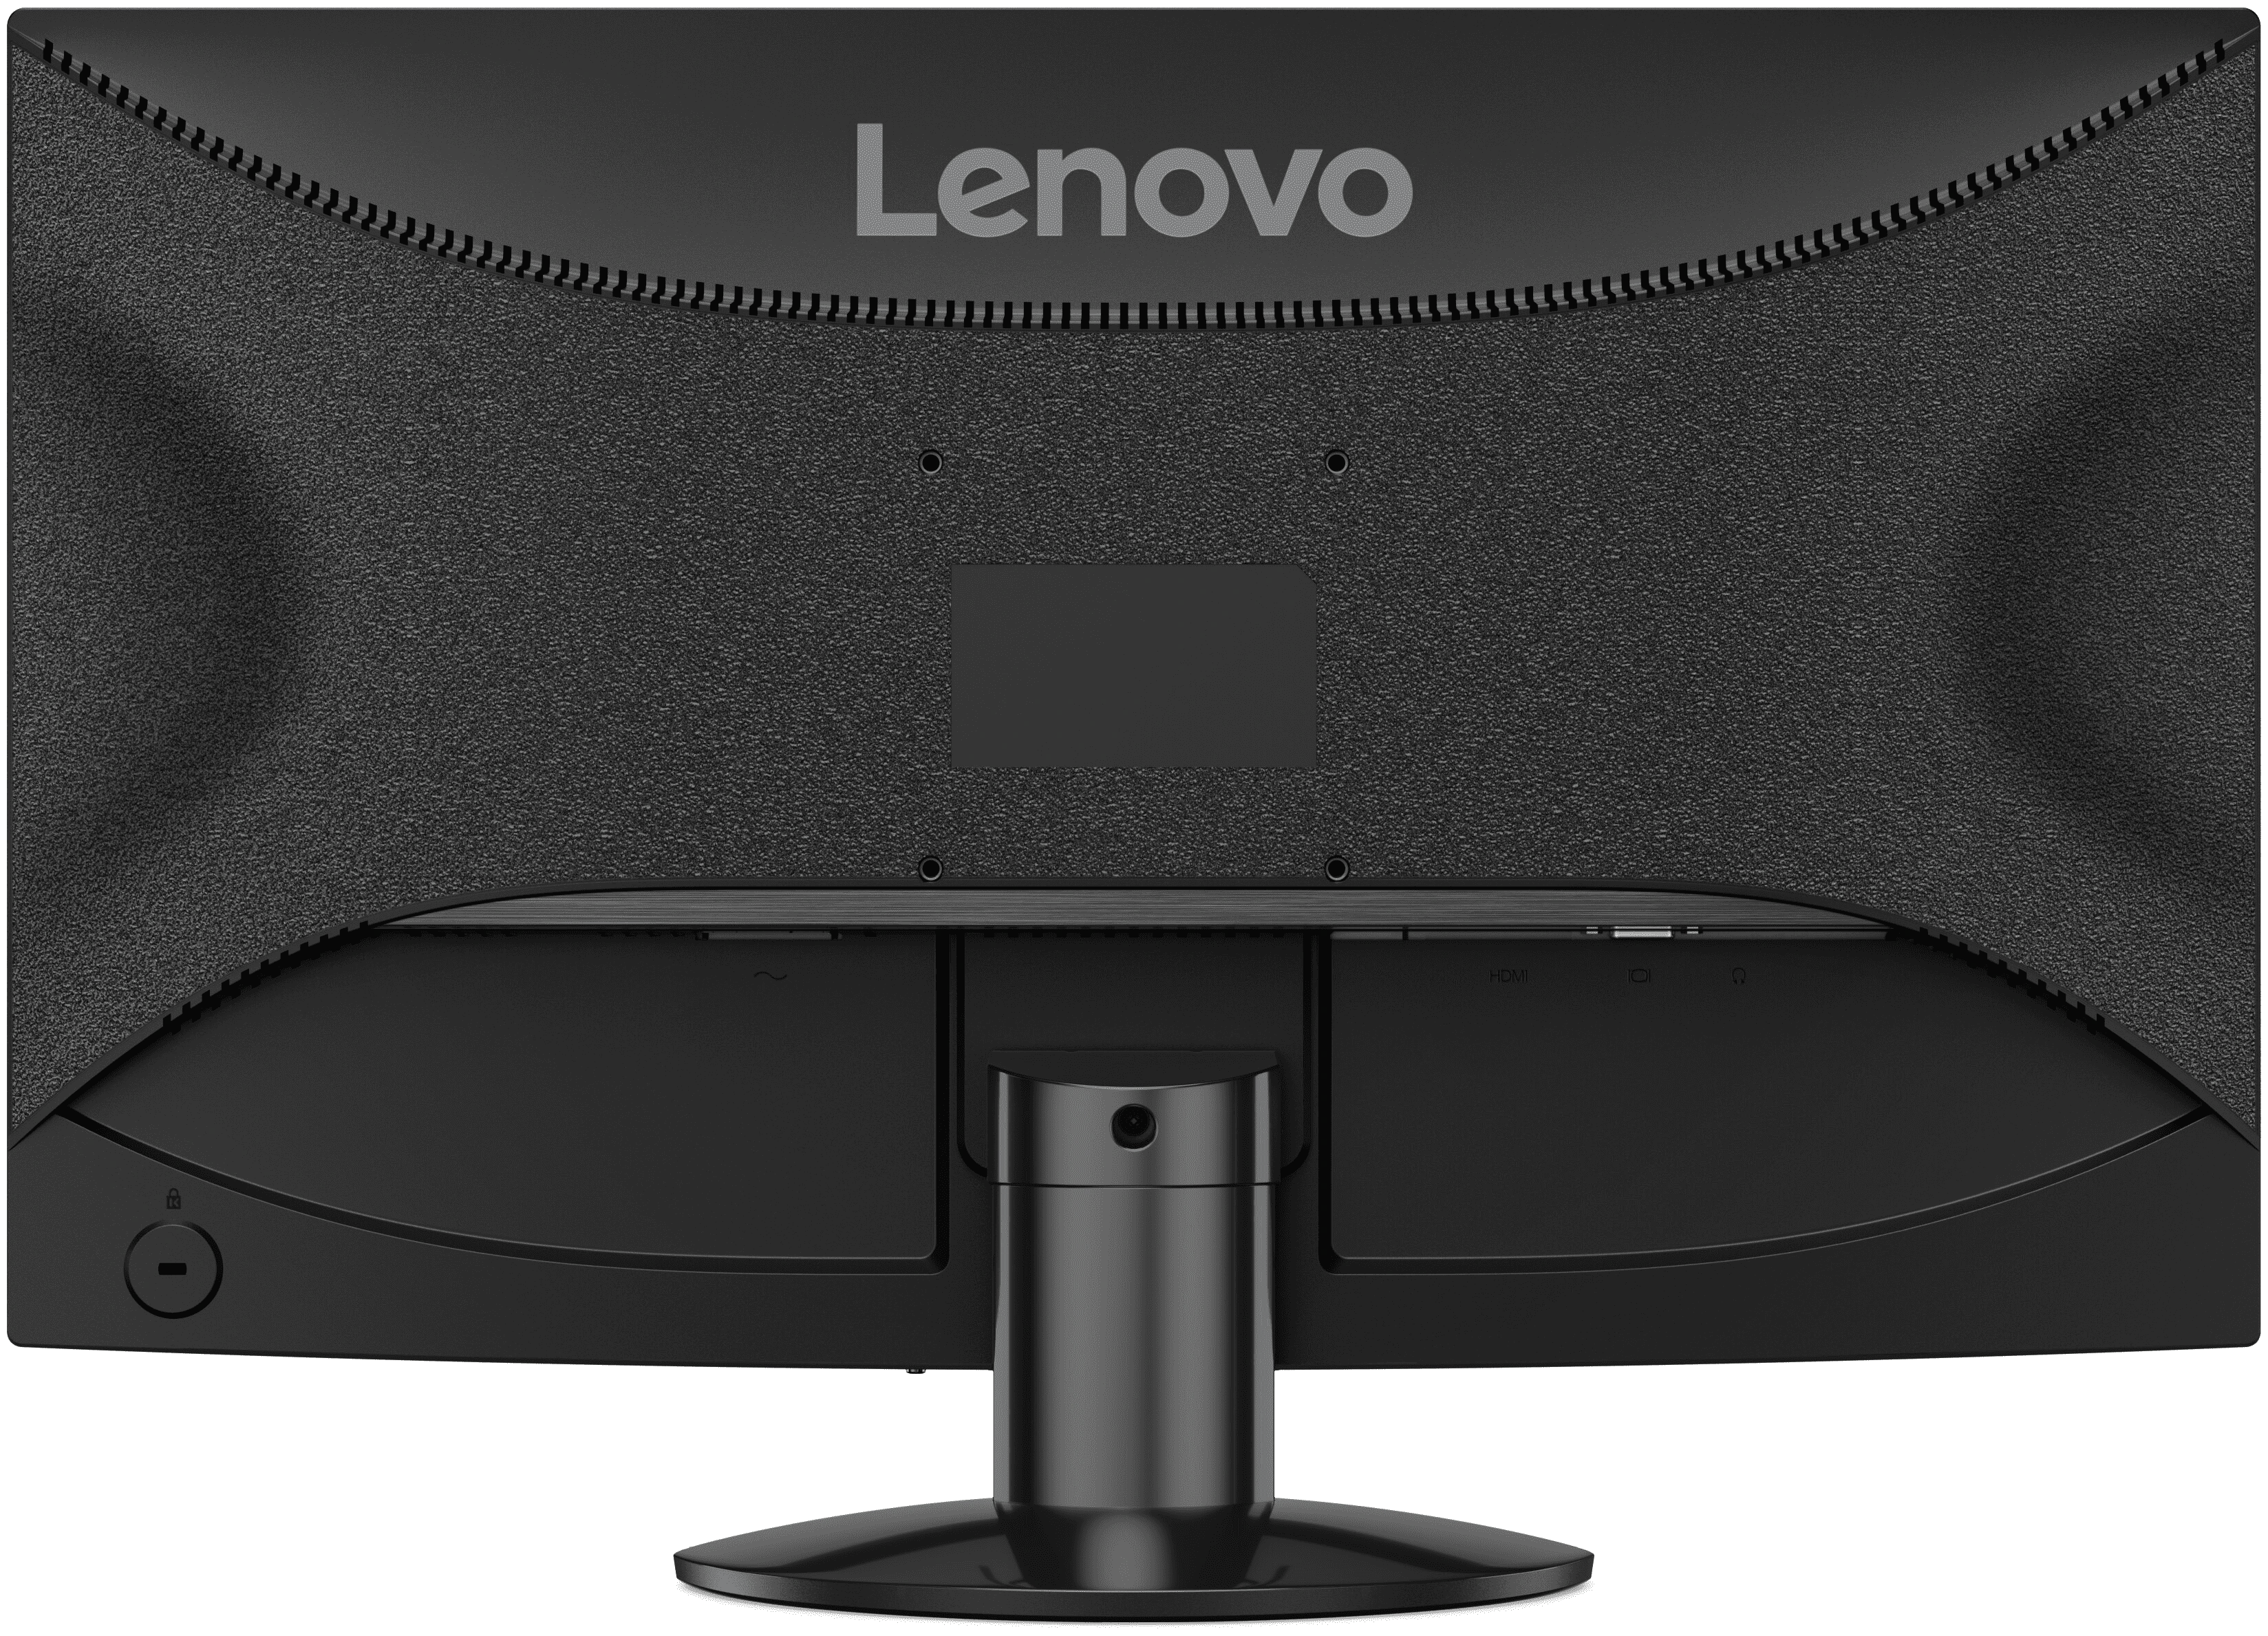 D24-10 Lenovo 23.6-inch Gaming Monitor with LED Backlit, TN Panel, VGA and HDMI Ports (Raven Black)-3